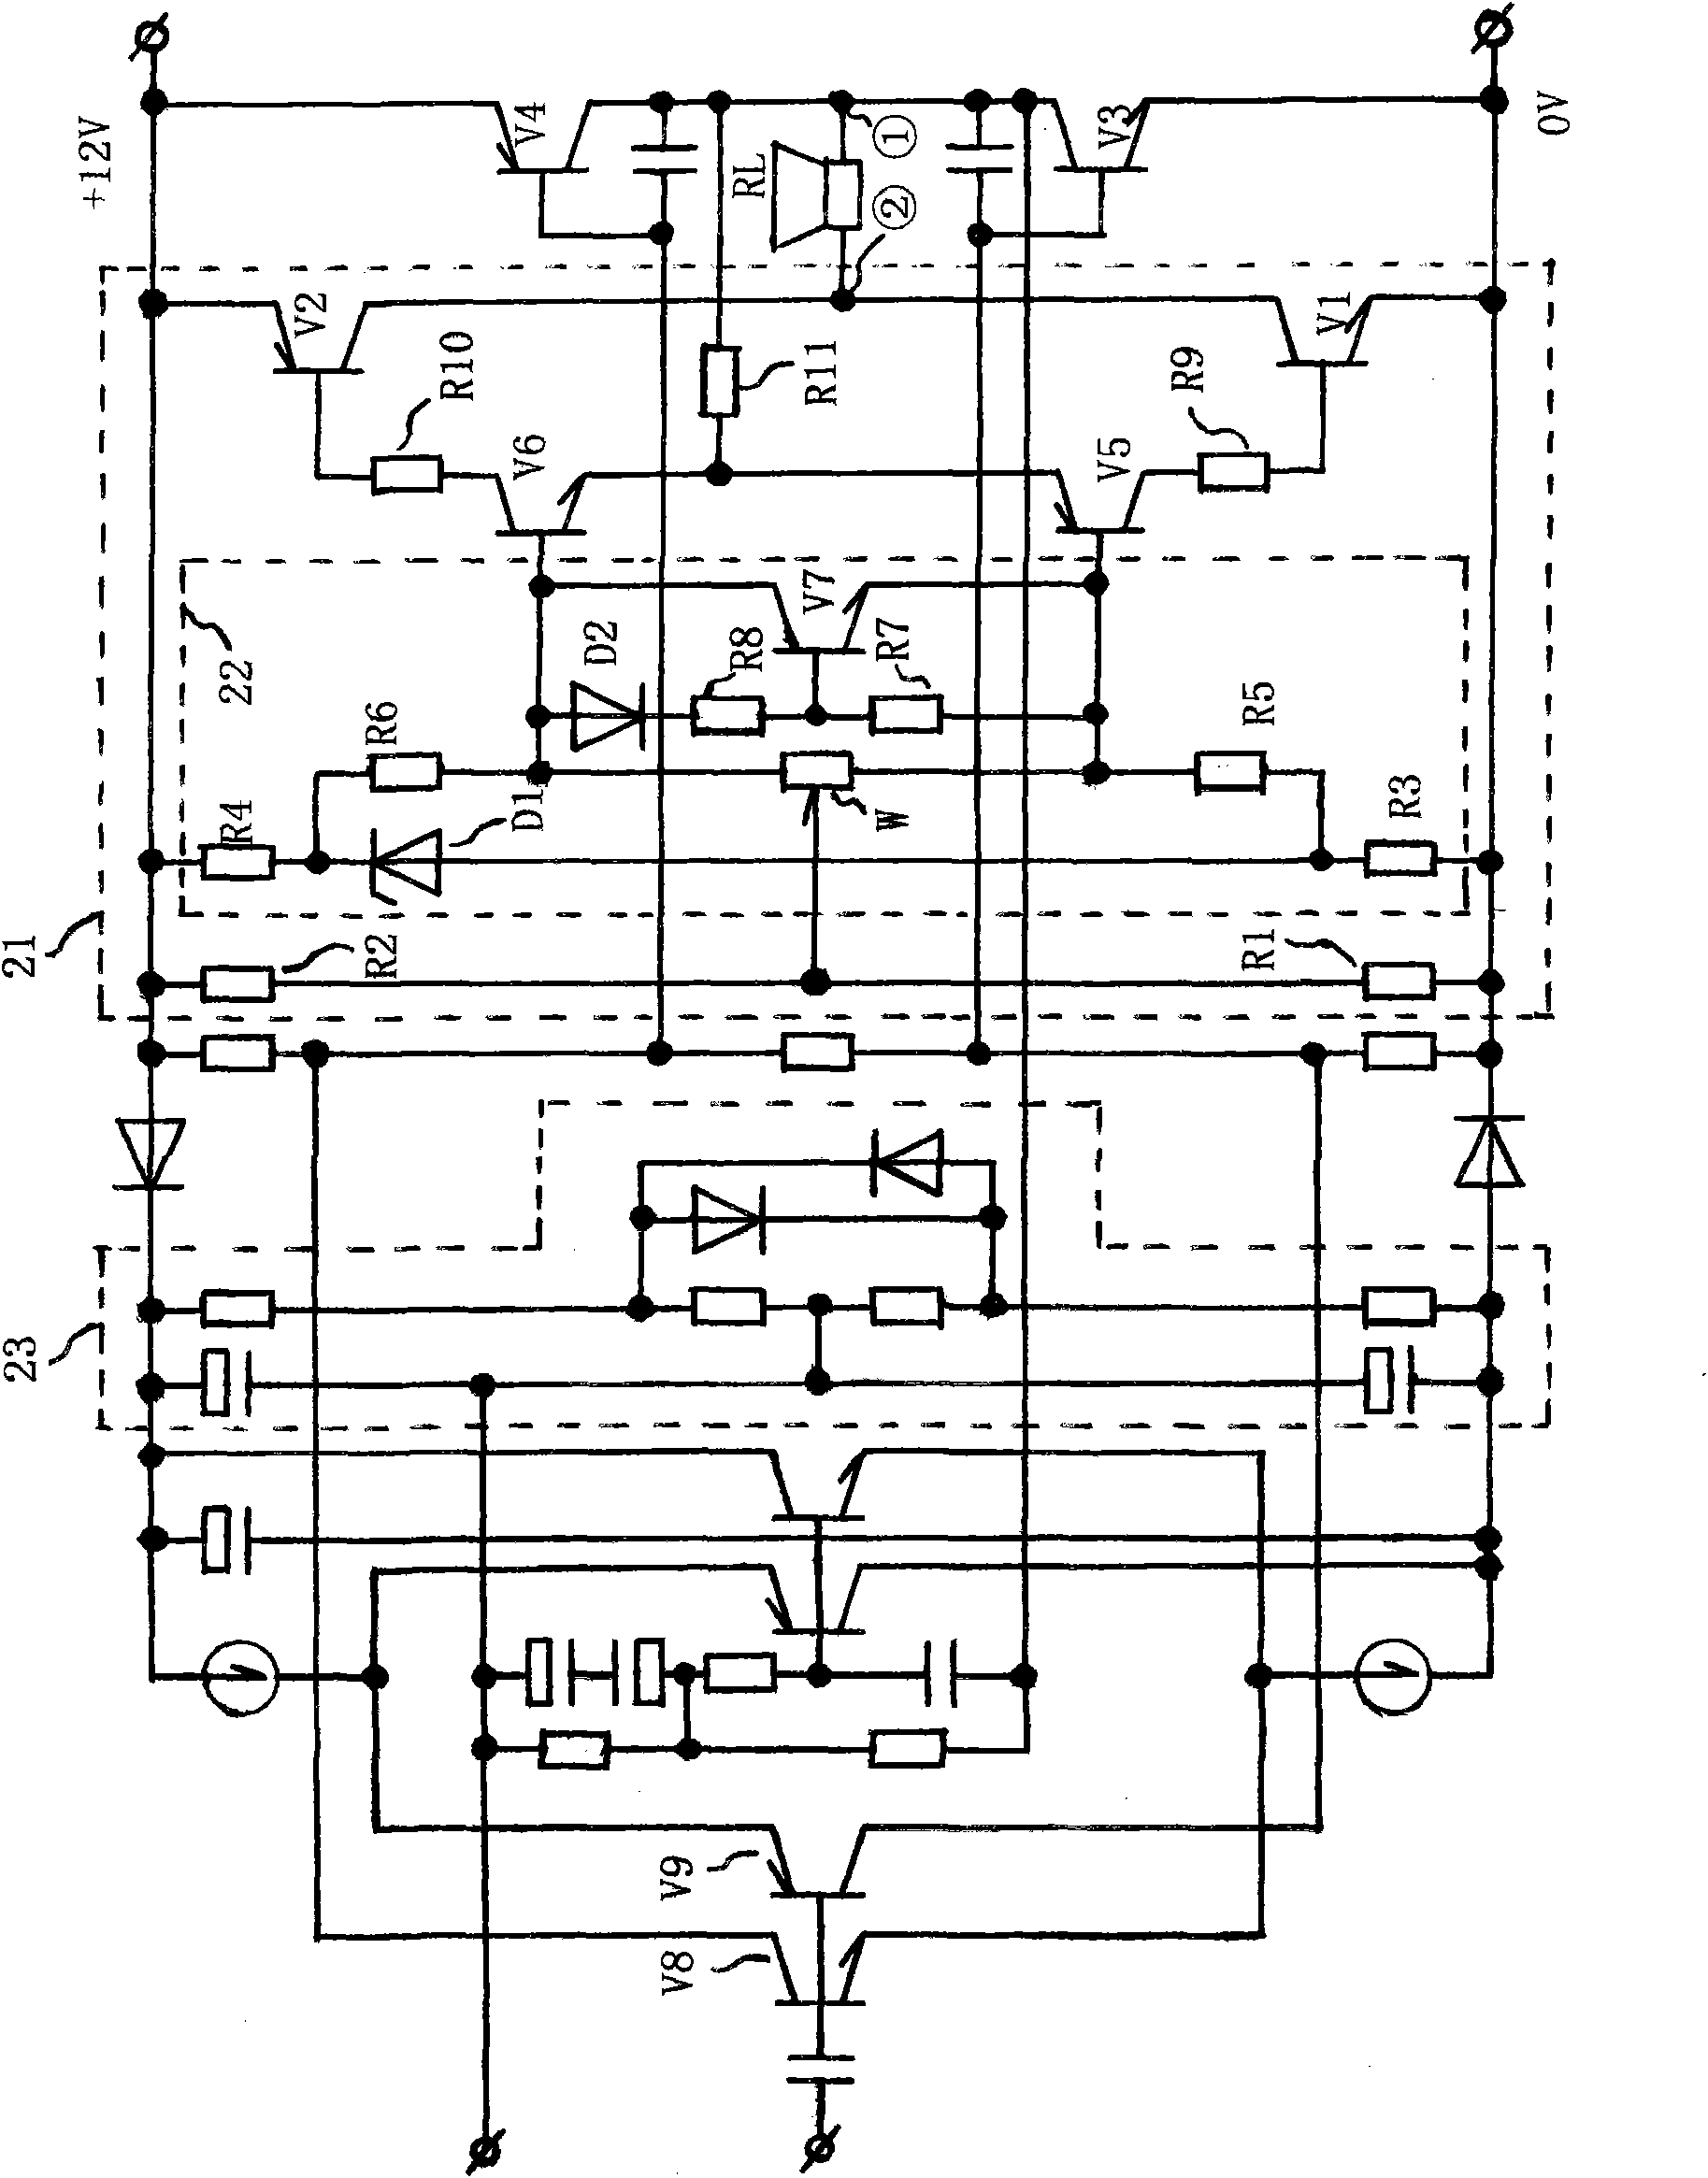 Converting type symmetrical power amplifier